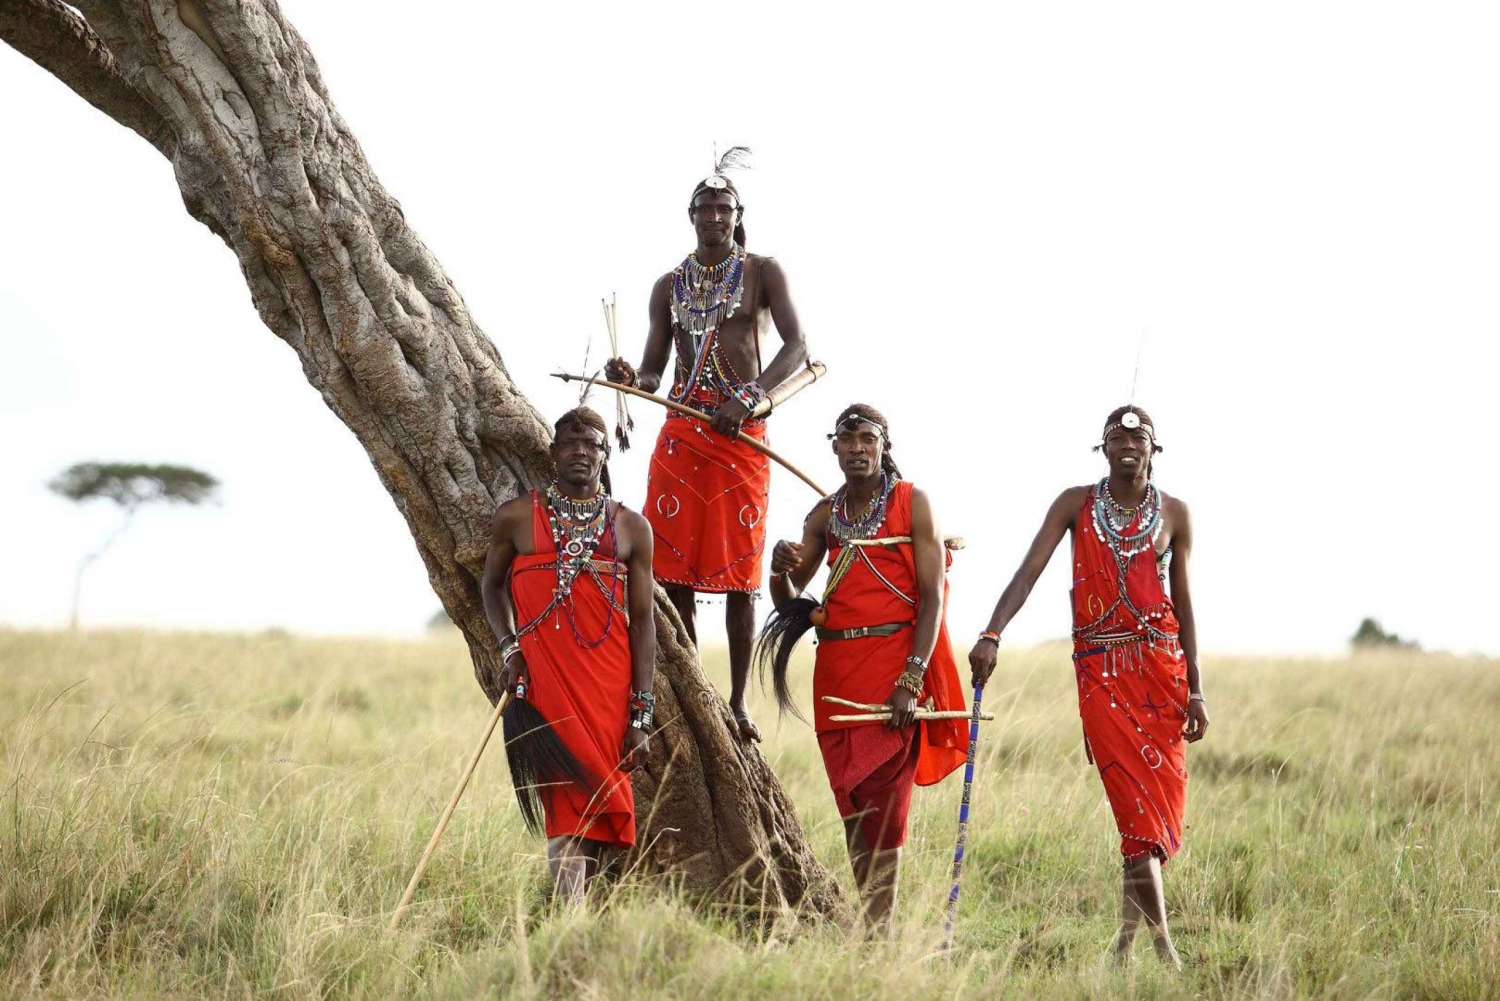 Nairobi : circuit safari de 6 jours à Amboseli, Nakuru et Maasai Mara